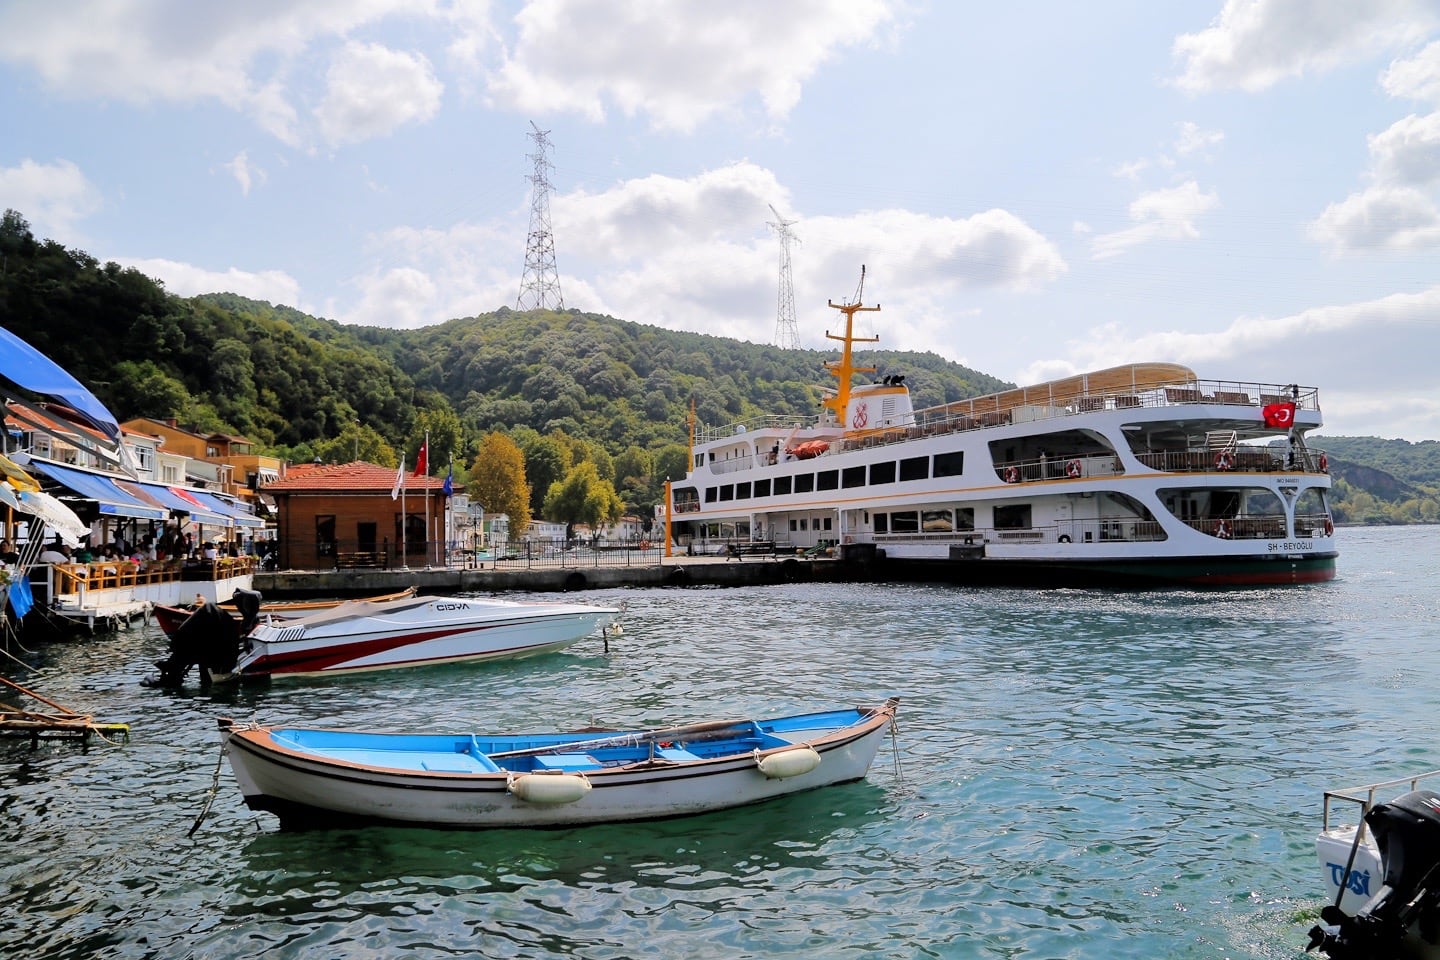 Sehir Hatlari ferry Bosphorus Cruise